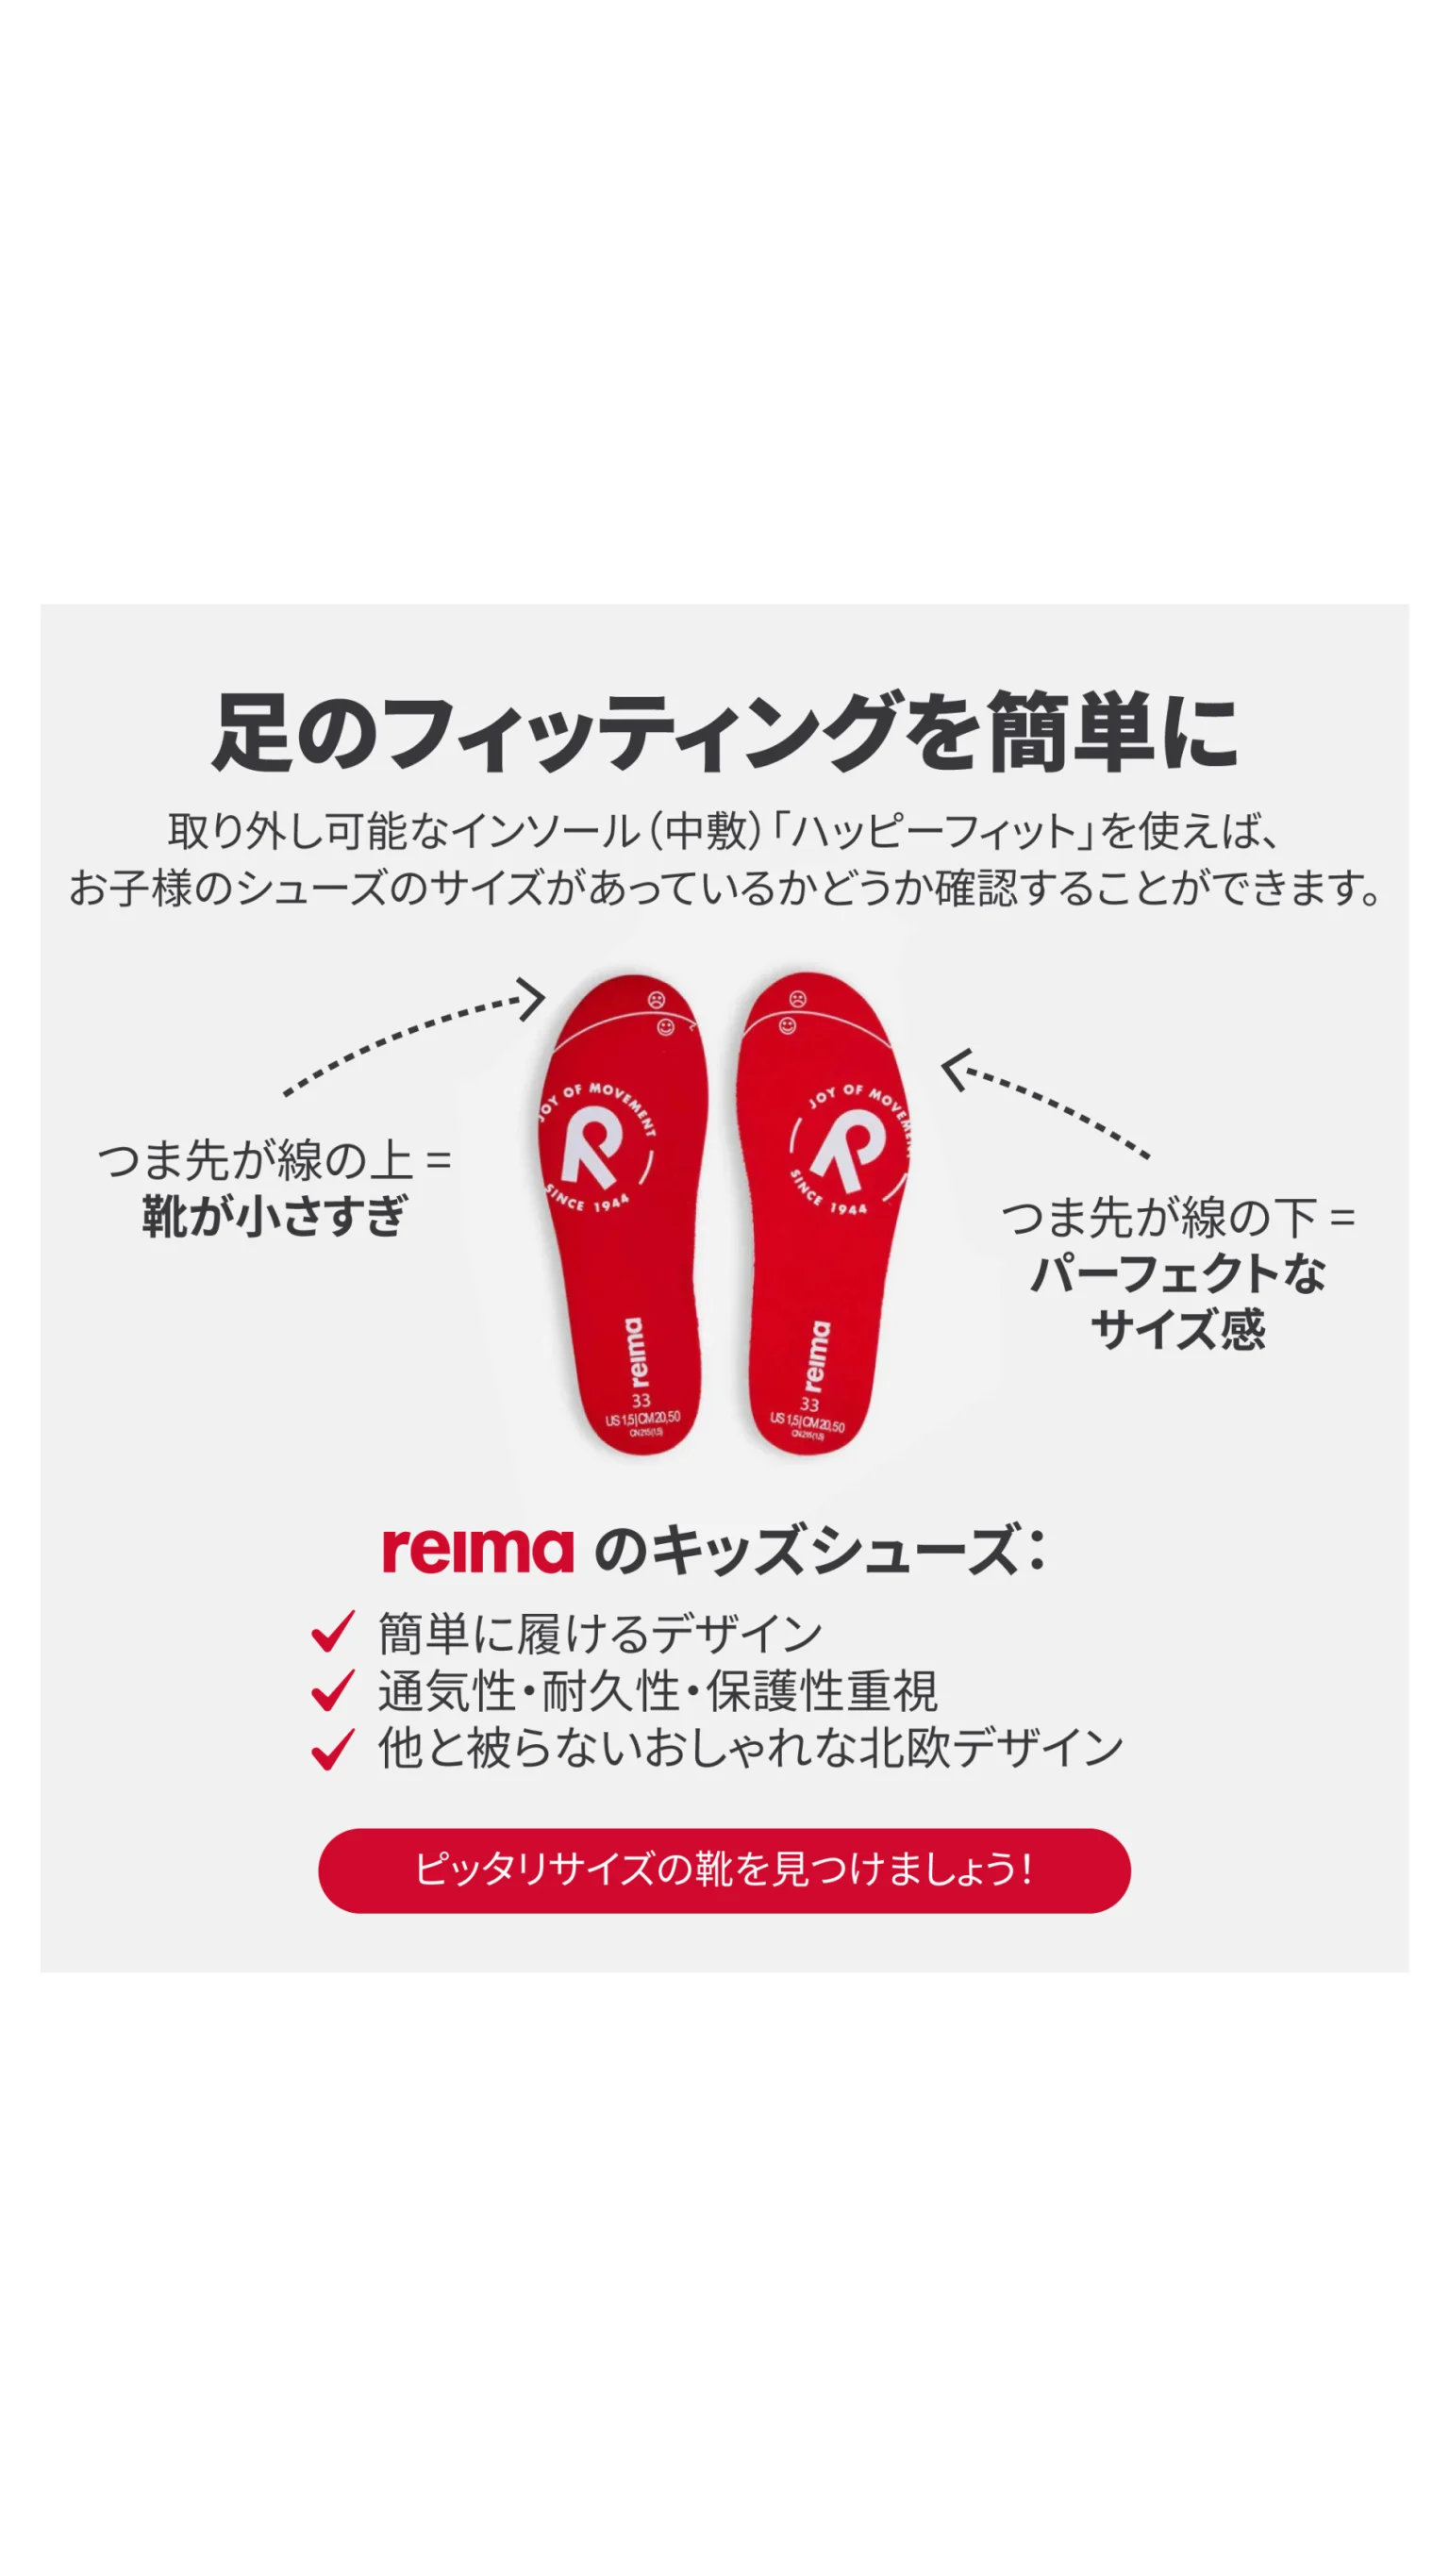 image-explaining-reima-kids-shoes-happy-fit-system